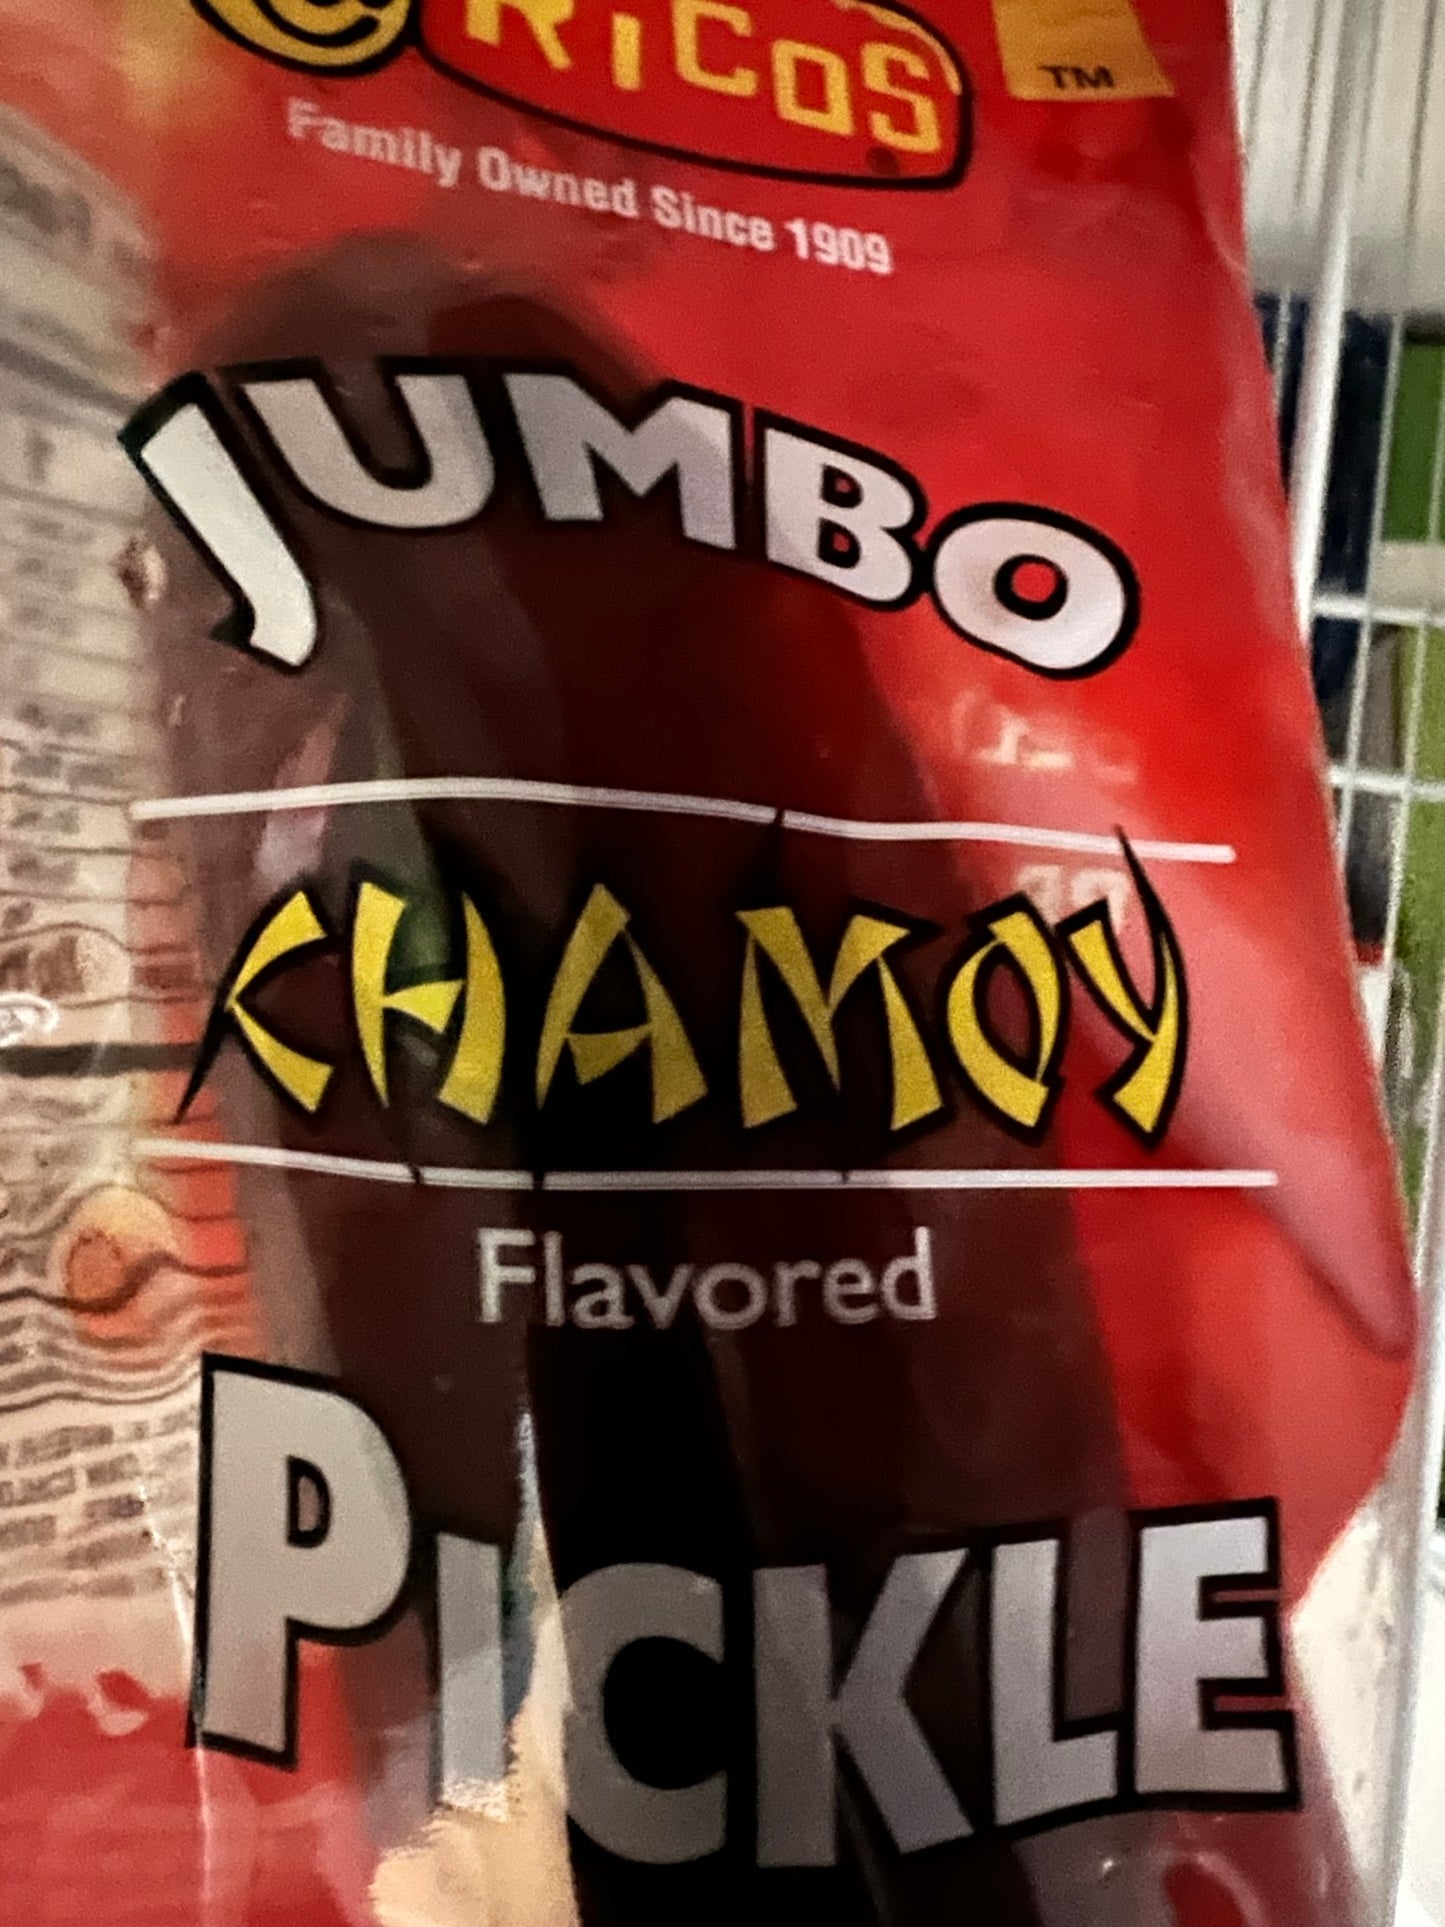 Chamoy pickle